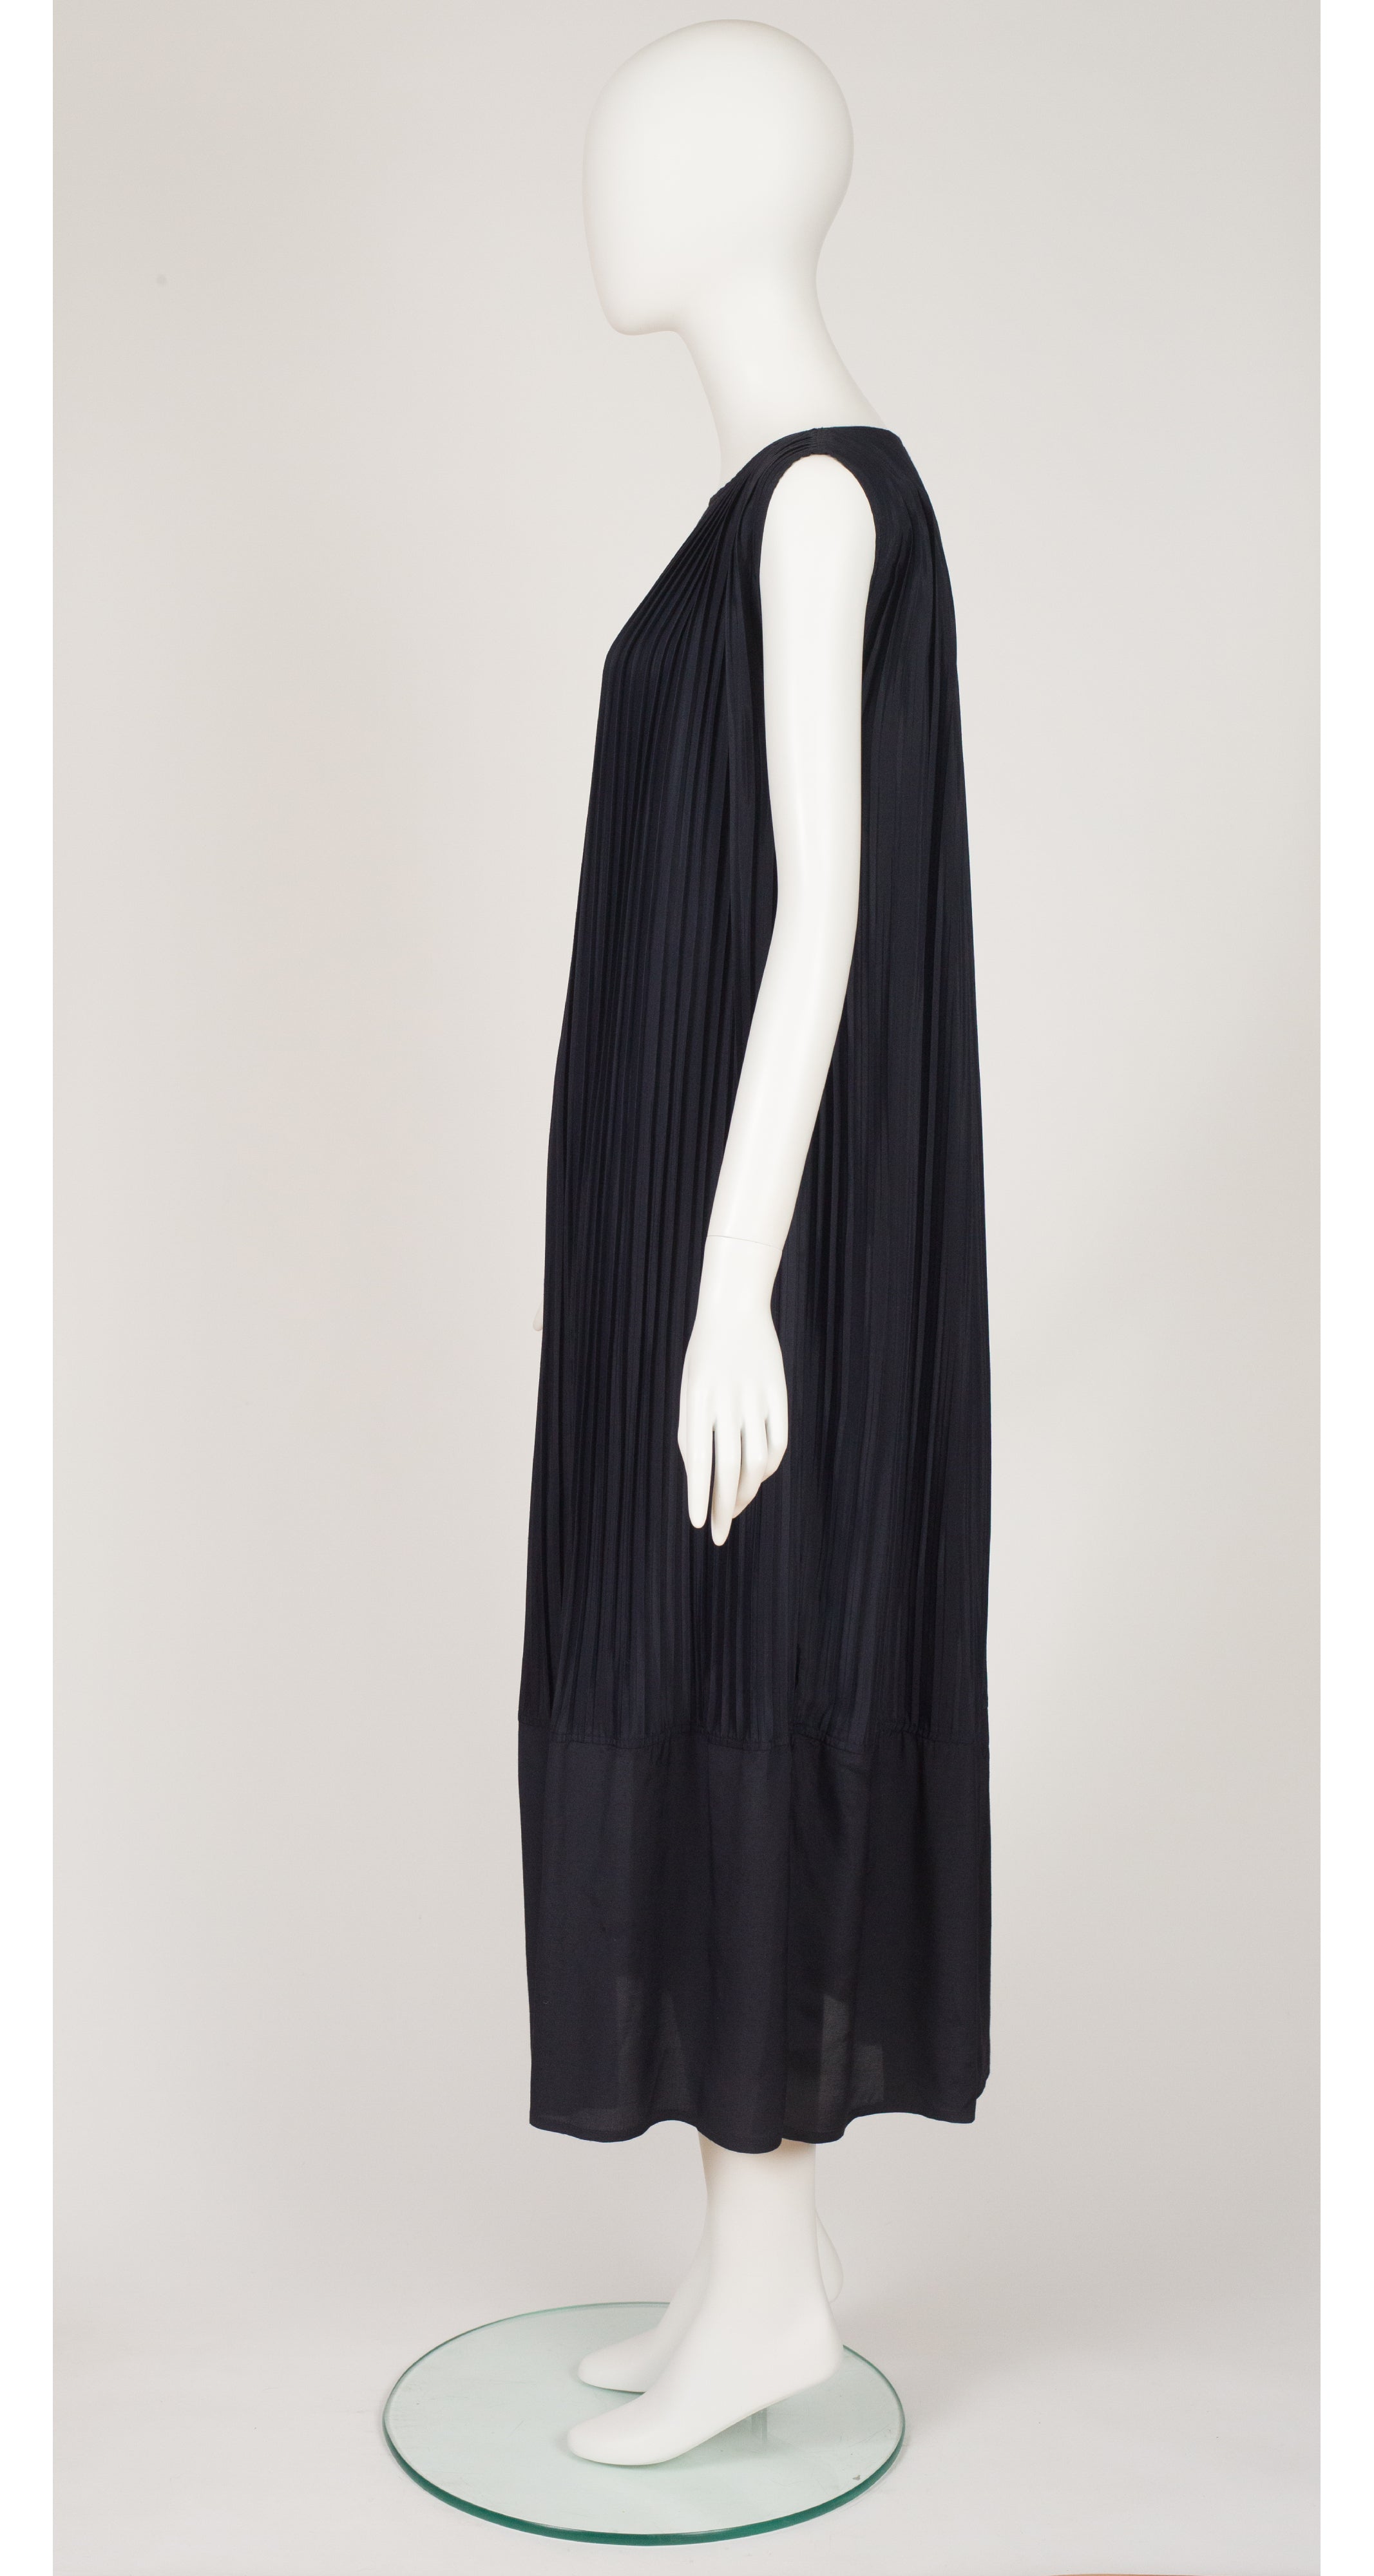 1980s Black Pleated Sleeveless Sack Dress